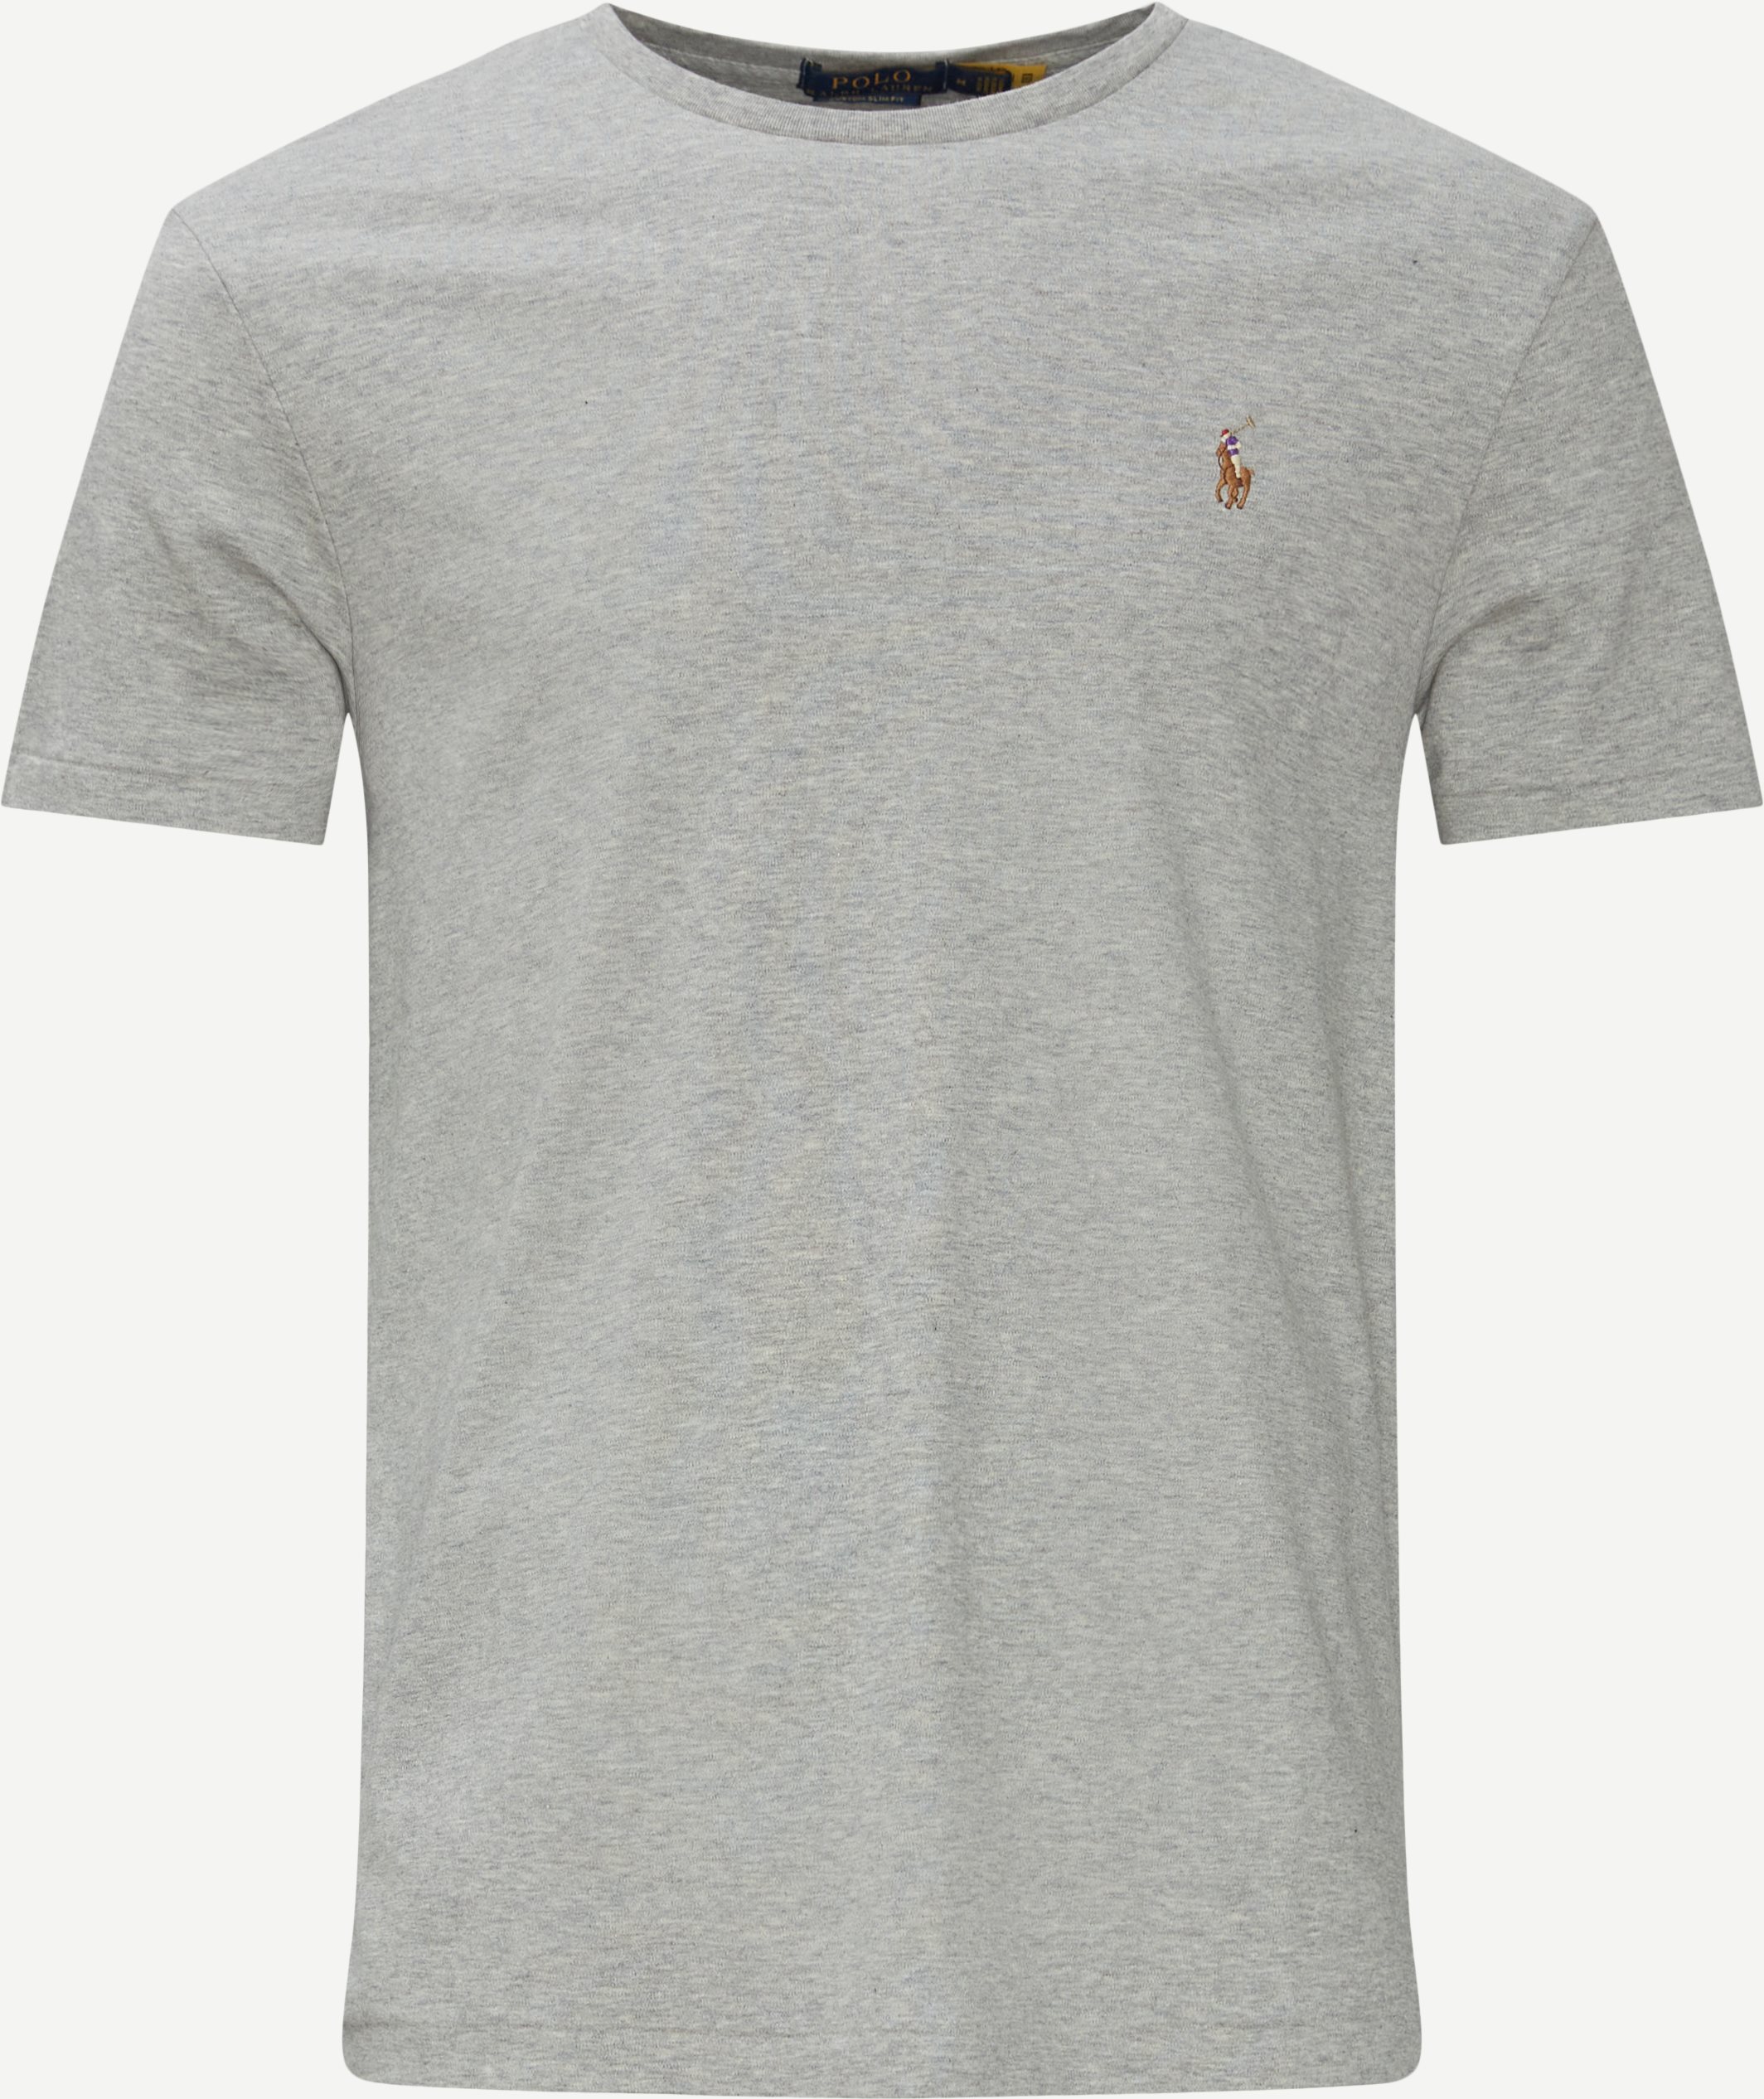 Soft Crew Neck Tee - T-shirts - Regular slim fit - Grå